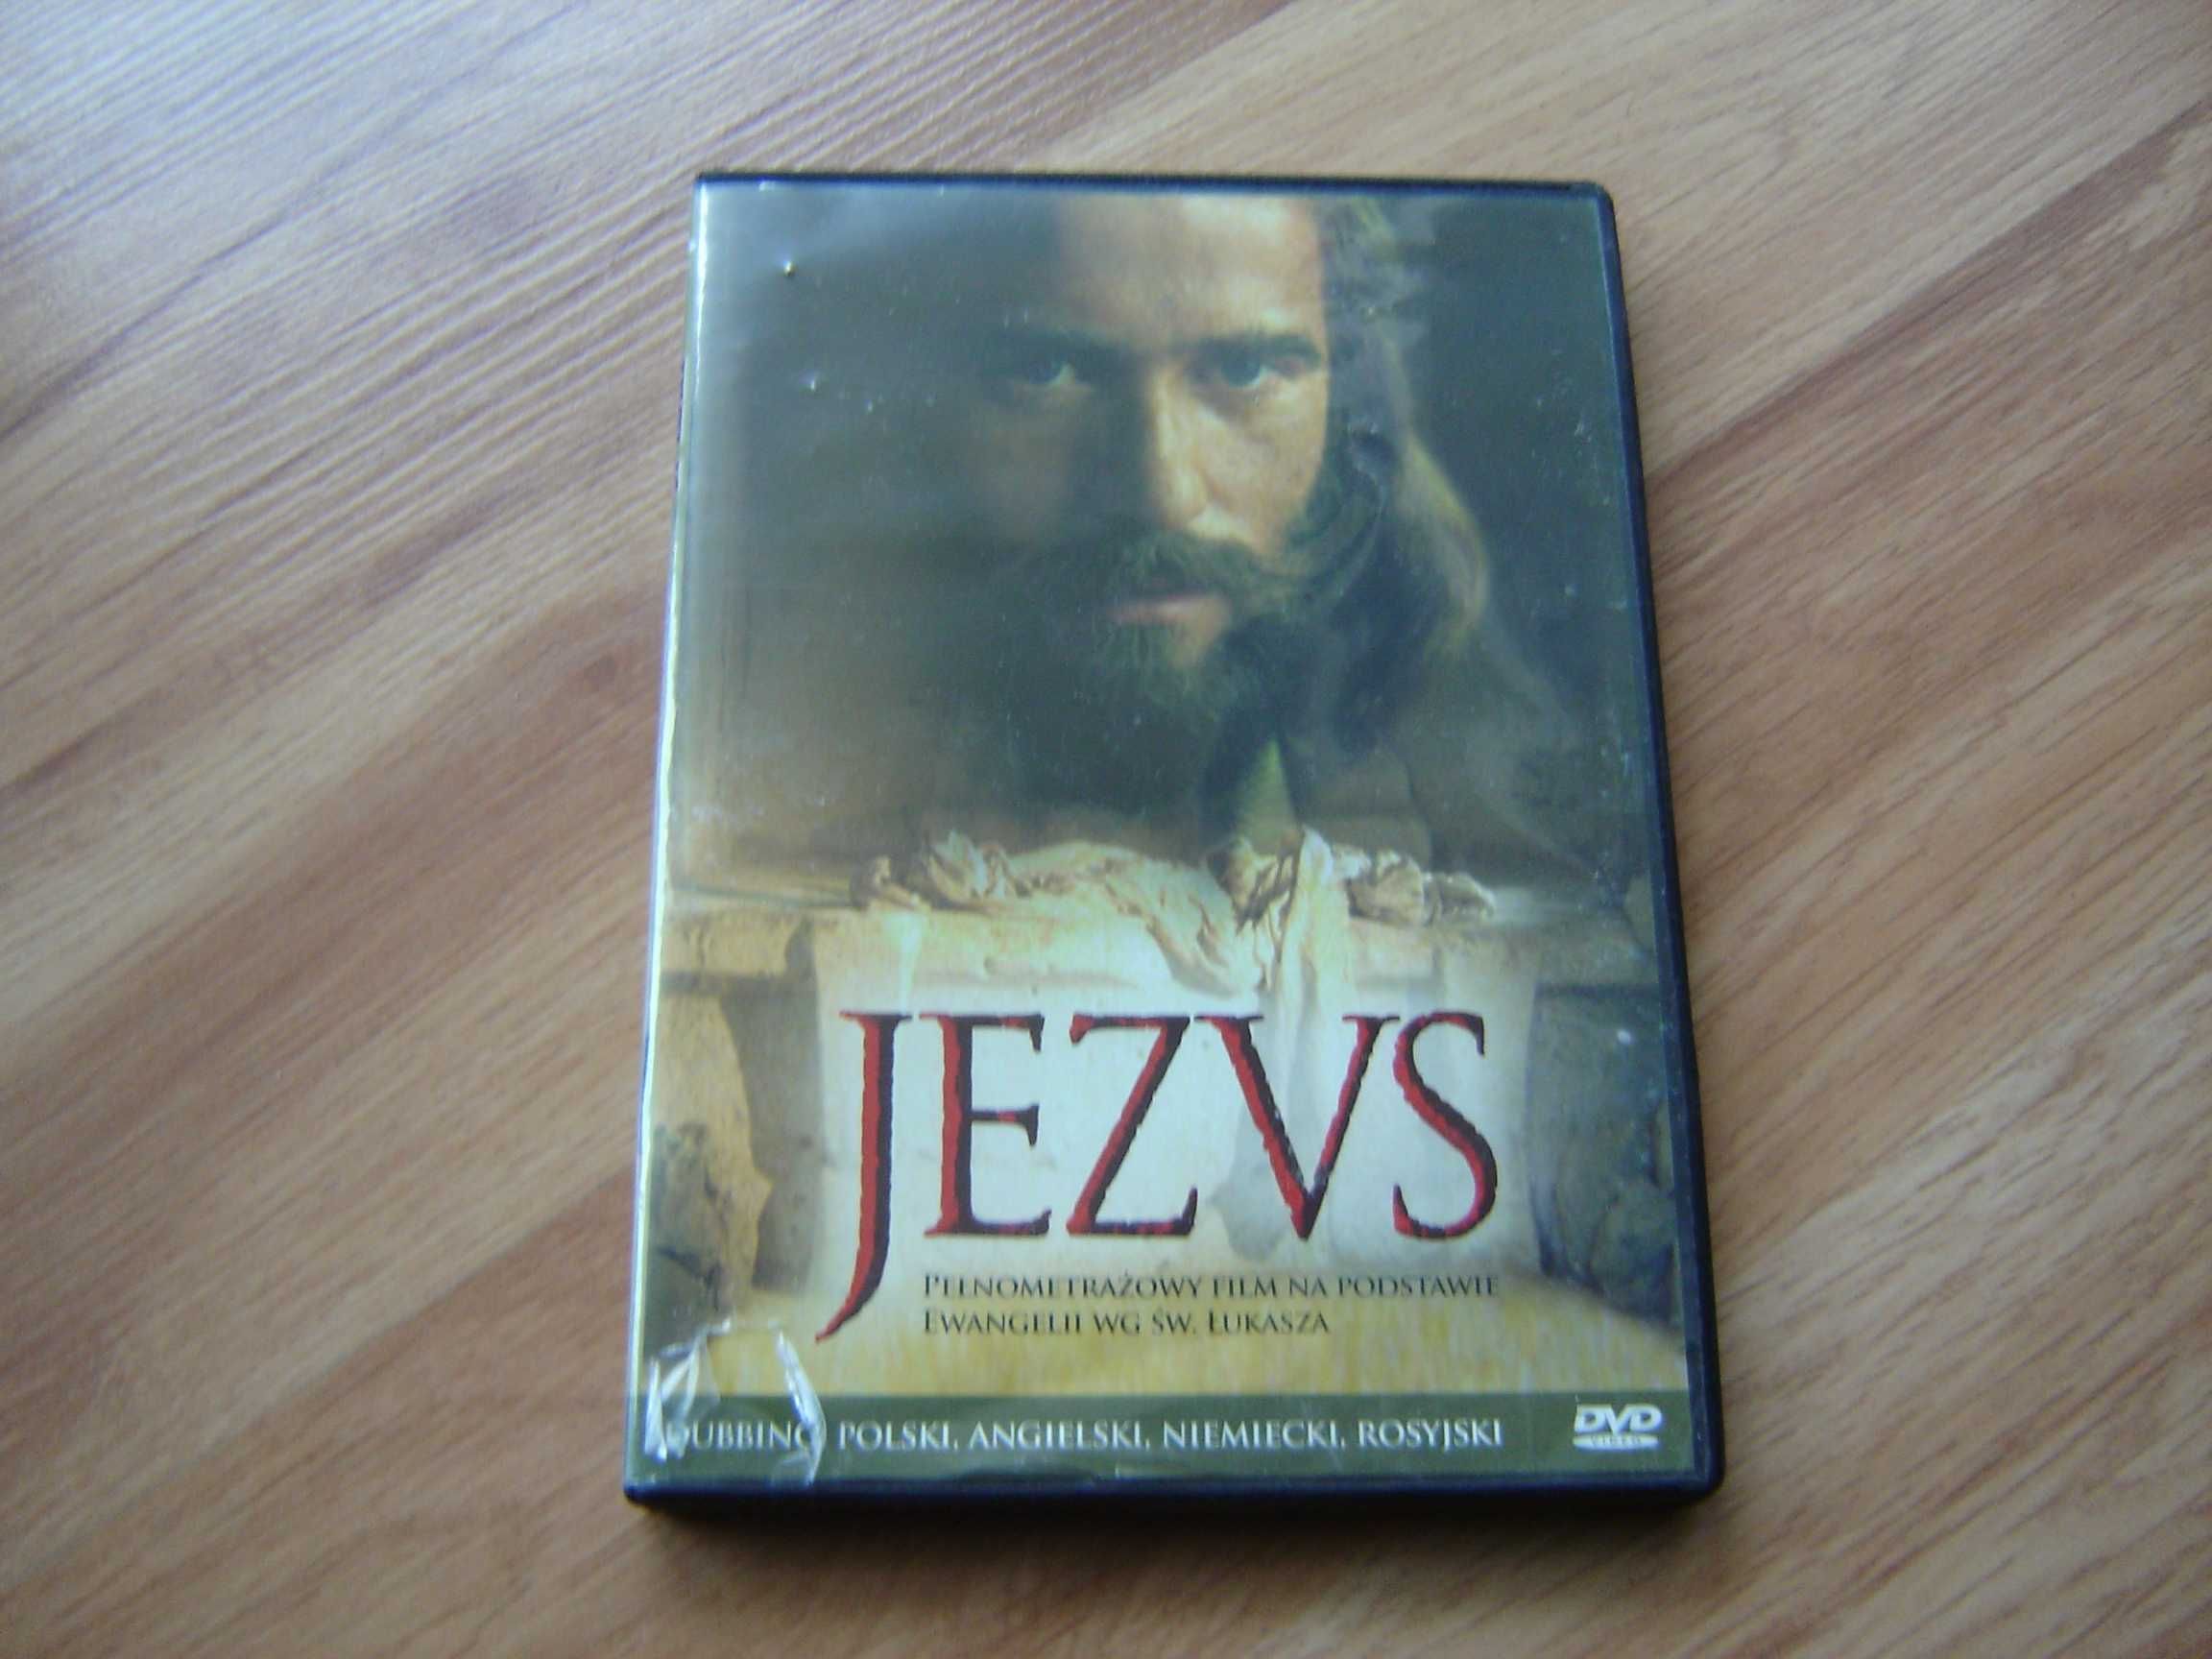 Film DVD "Jezus"